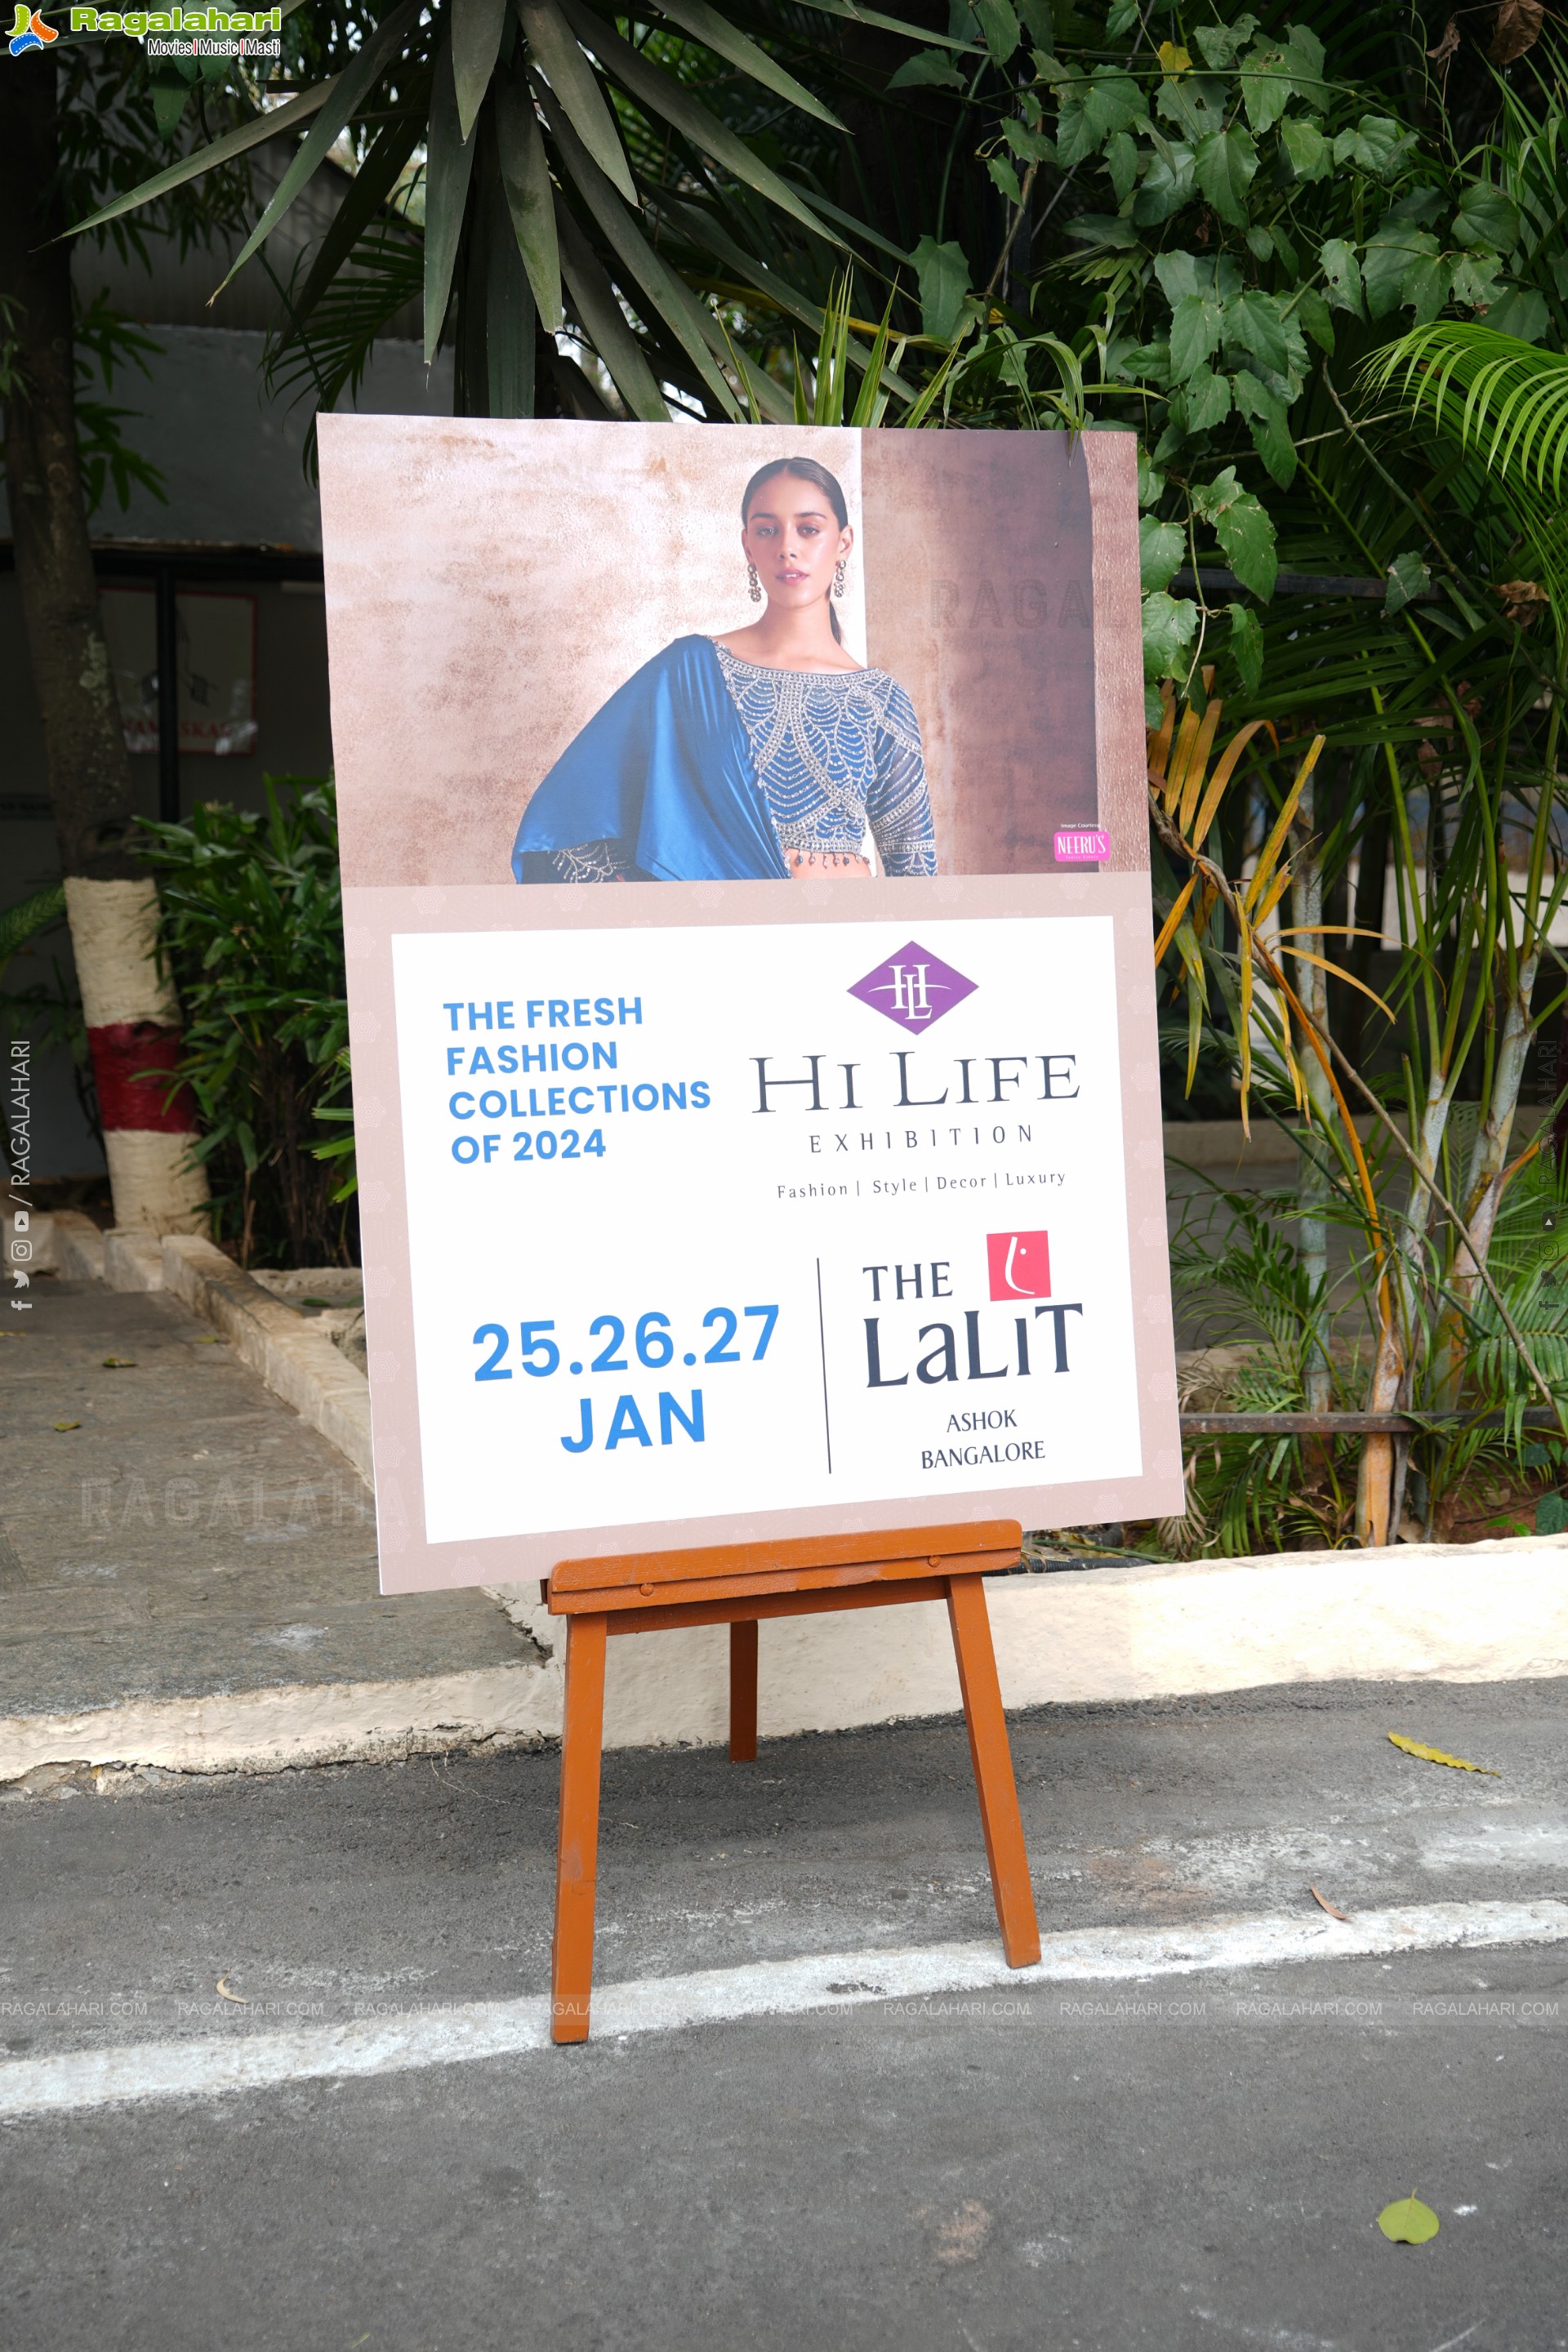 Hi Life Exhibition January 2024 Kicks Off at The Lalit Ashok, Bangalore